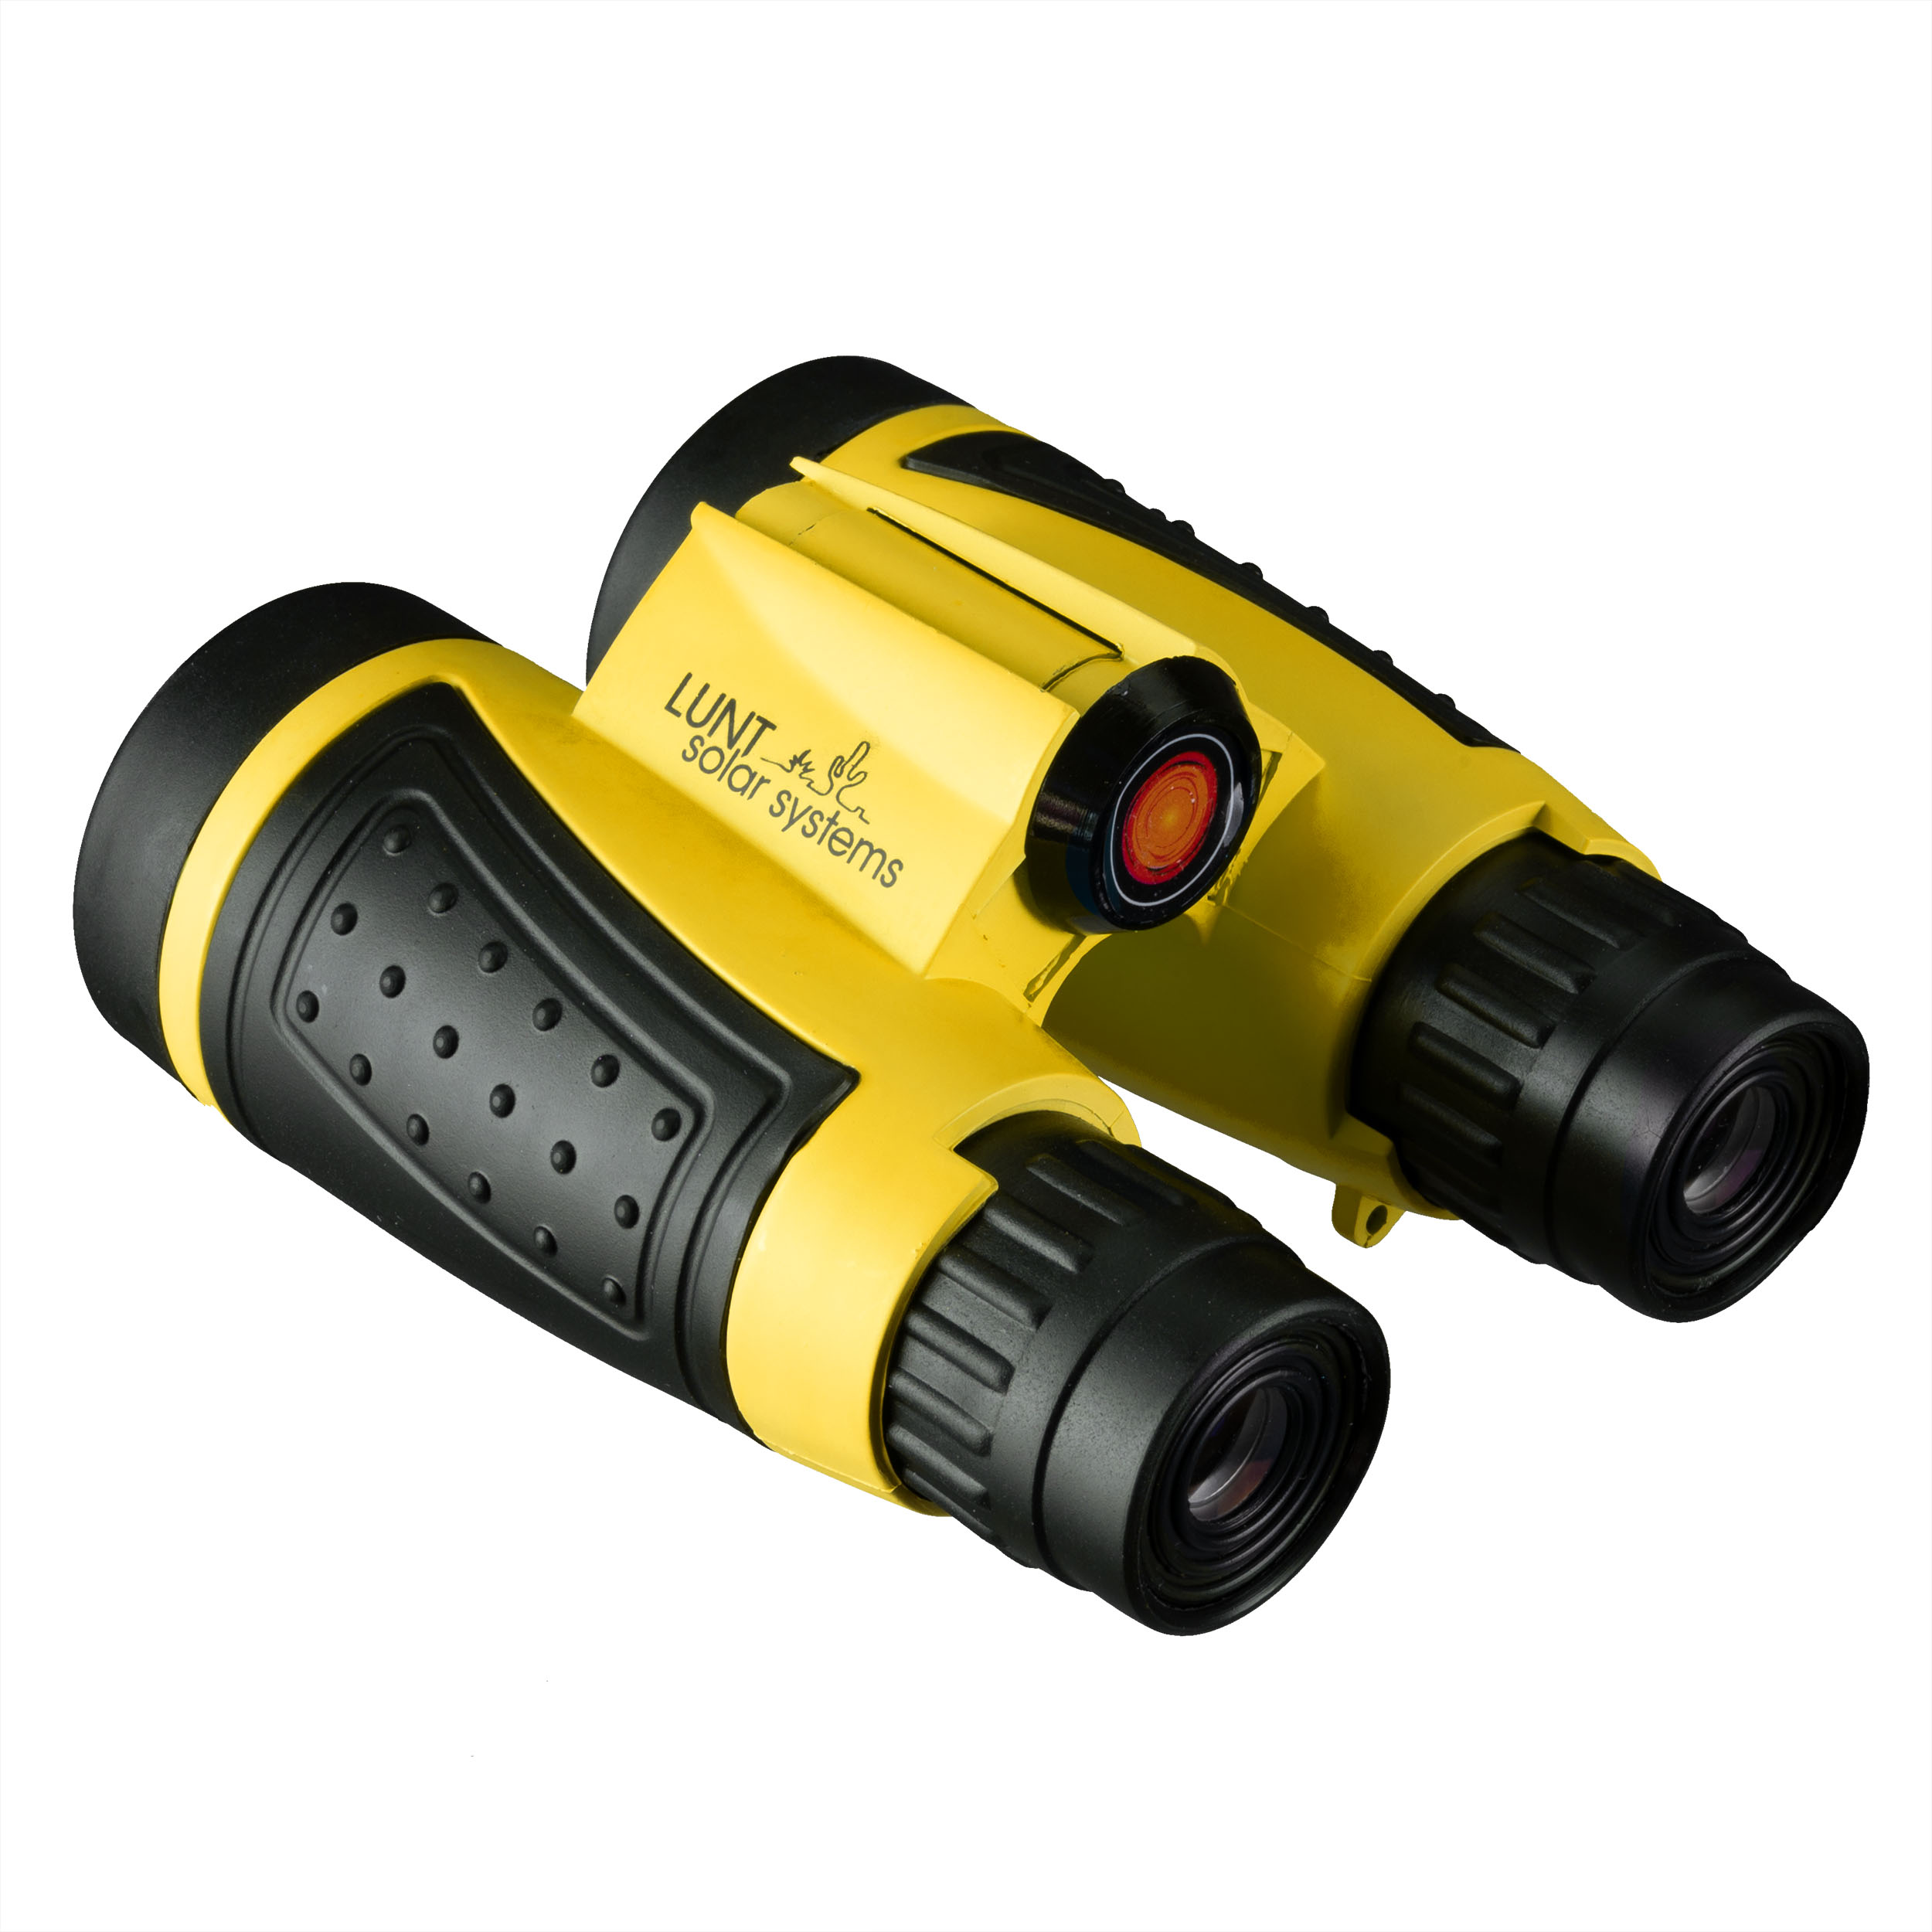 LUNT Mini SUNoculars yellow